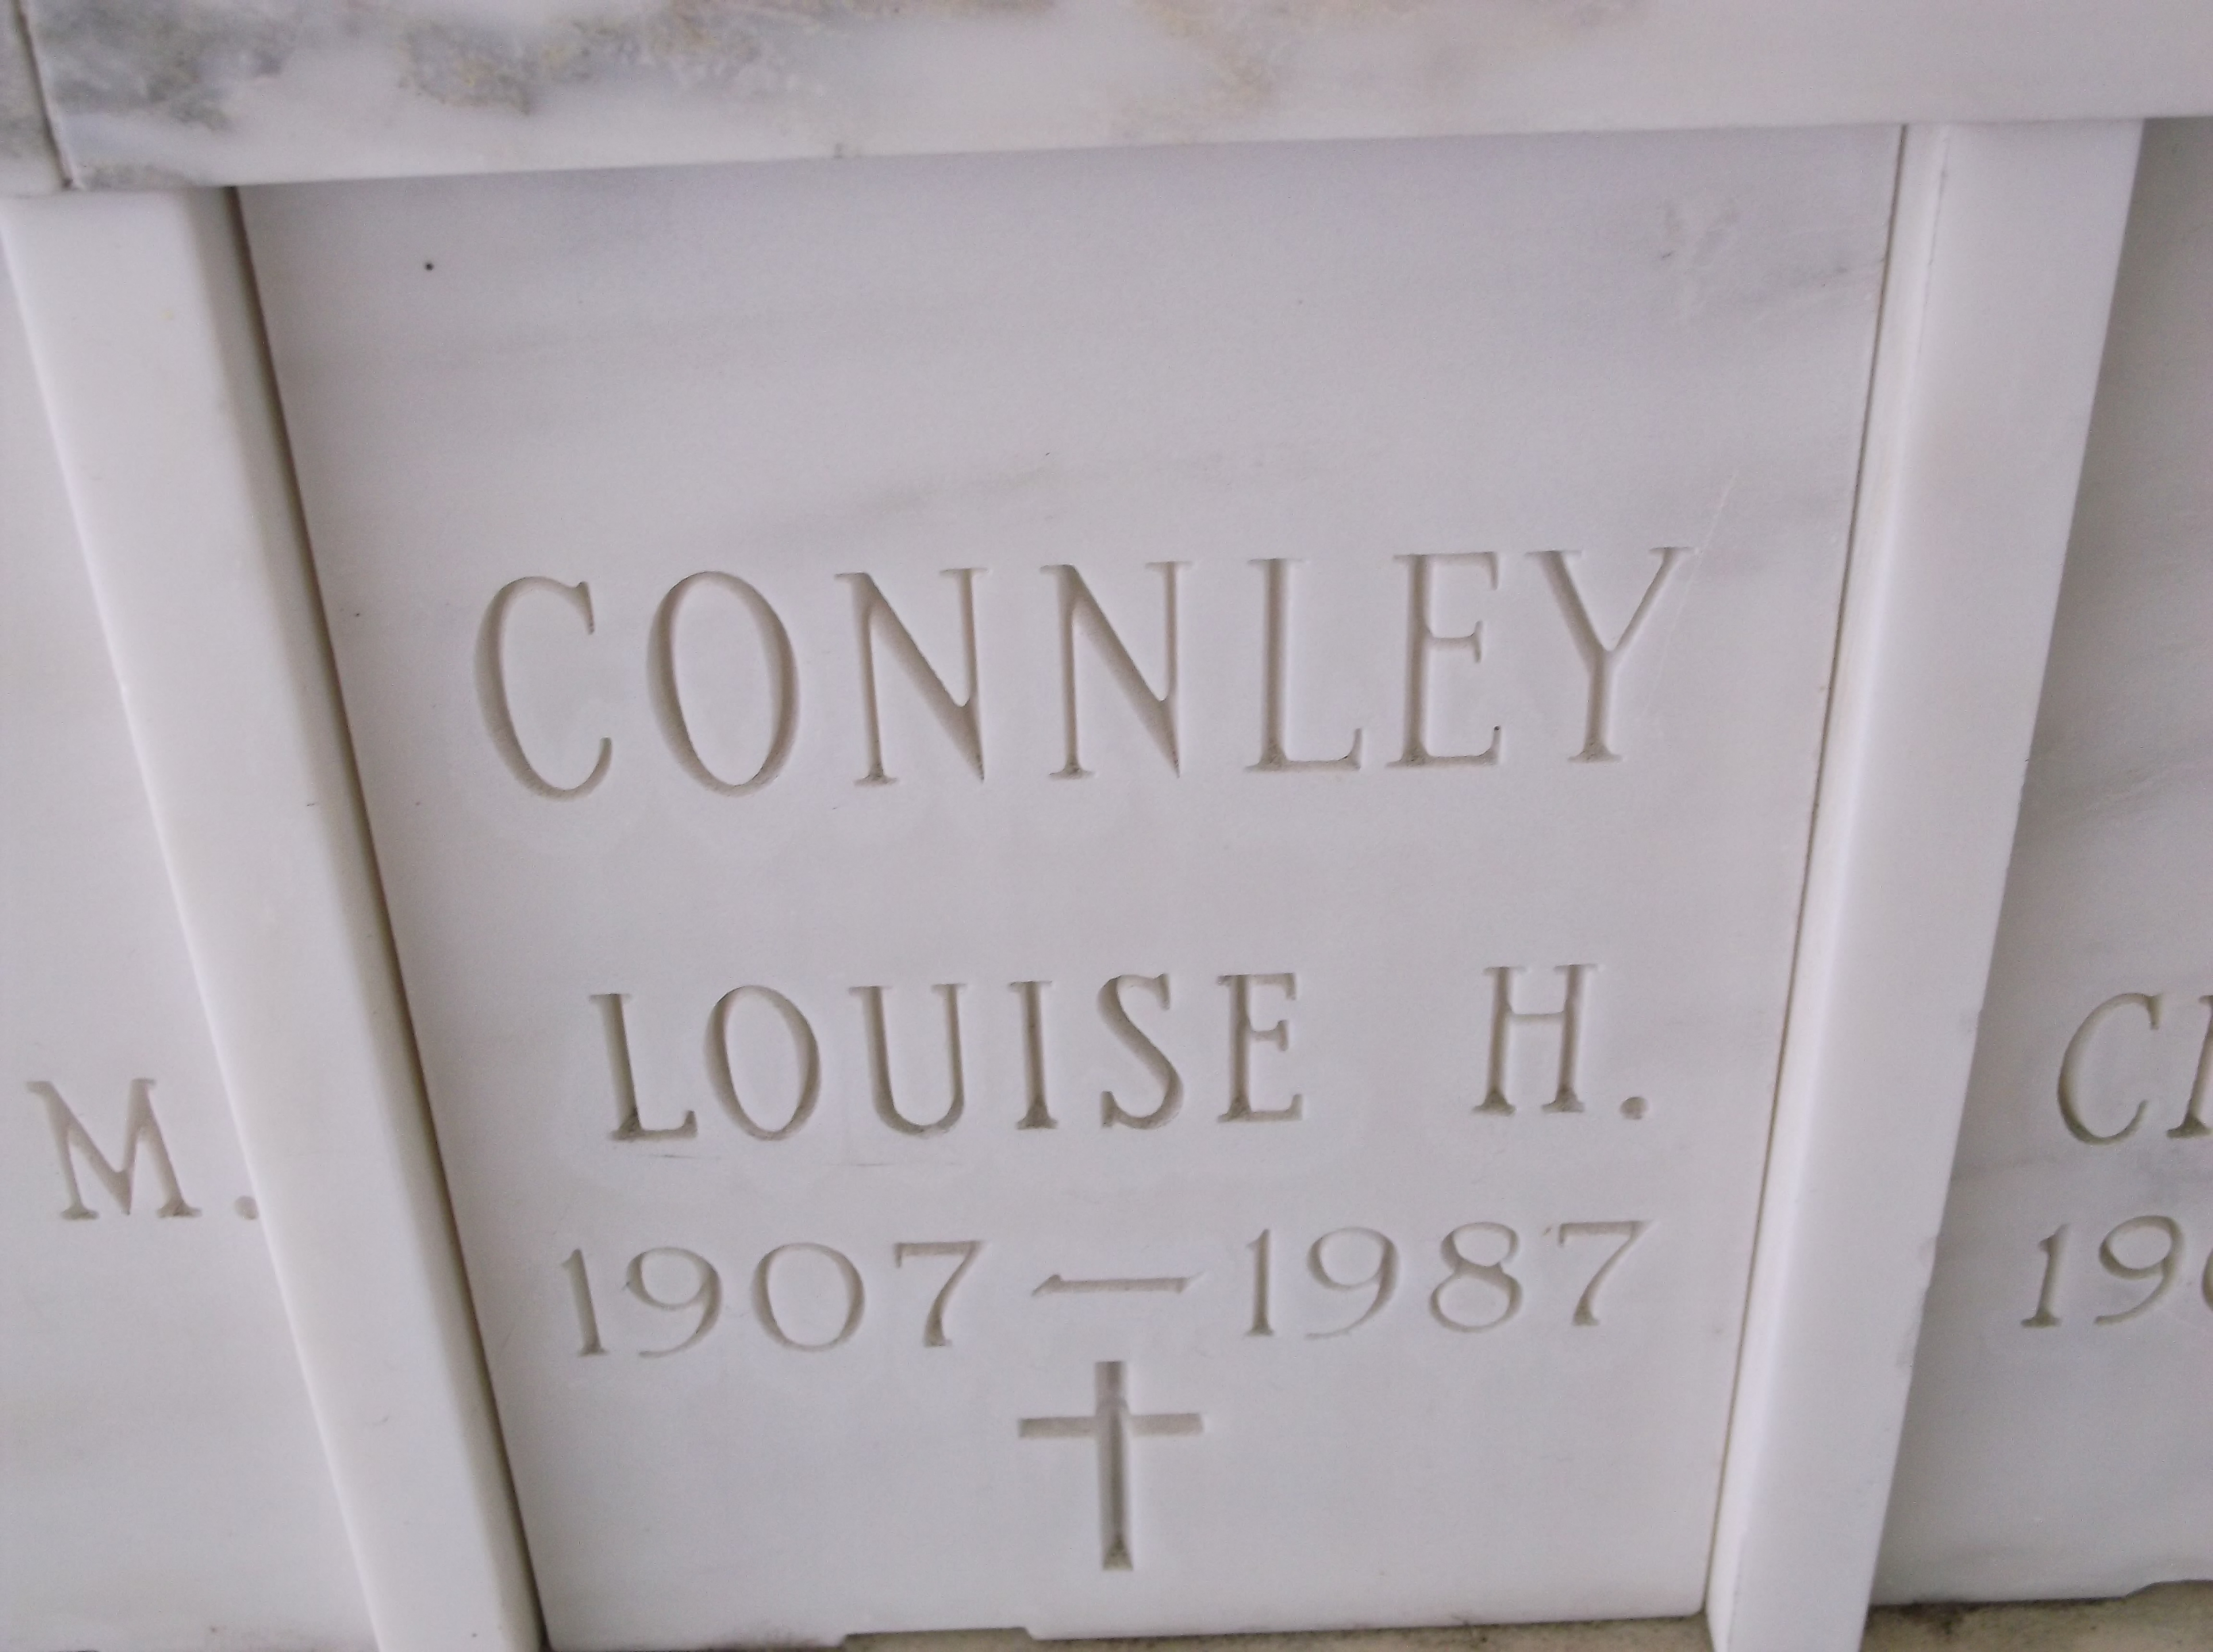 Louise H Connley